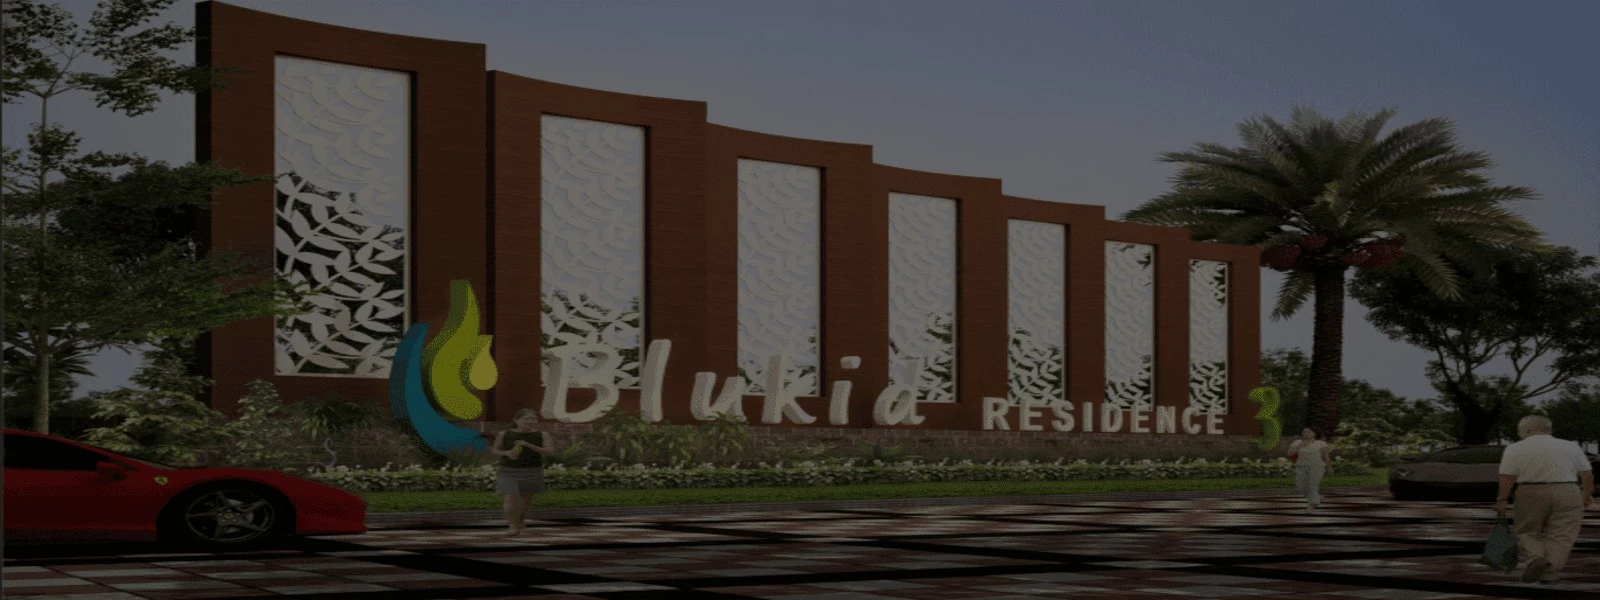 Blukid Residence 3 Banner Dekstop